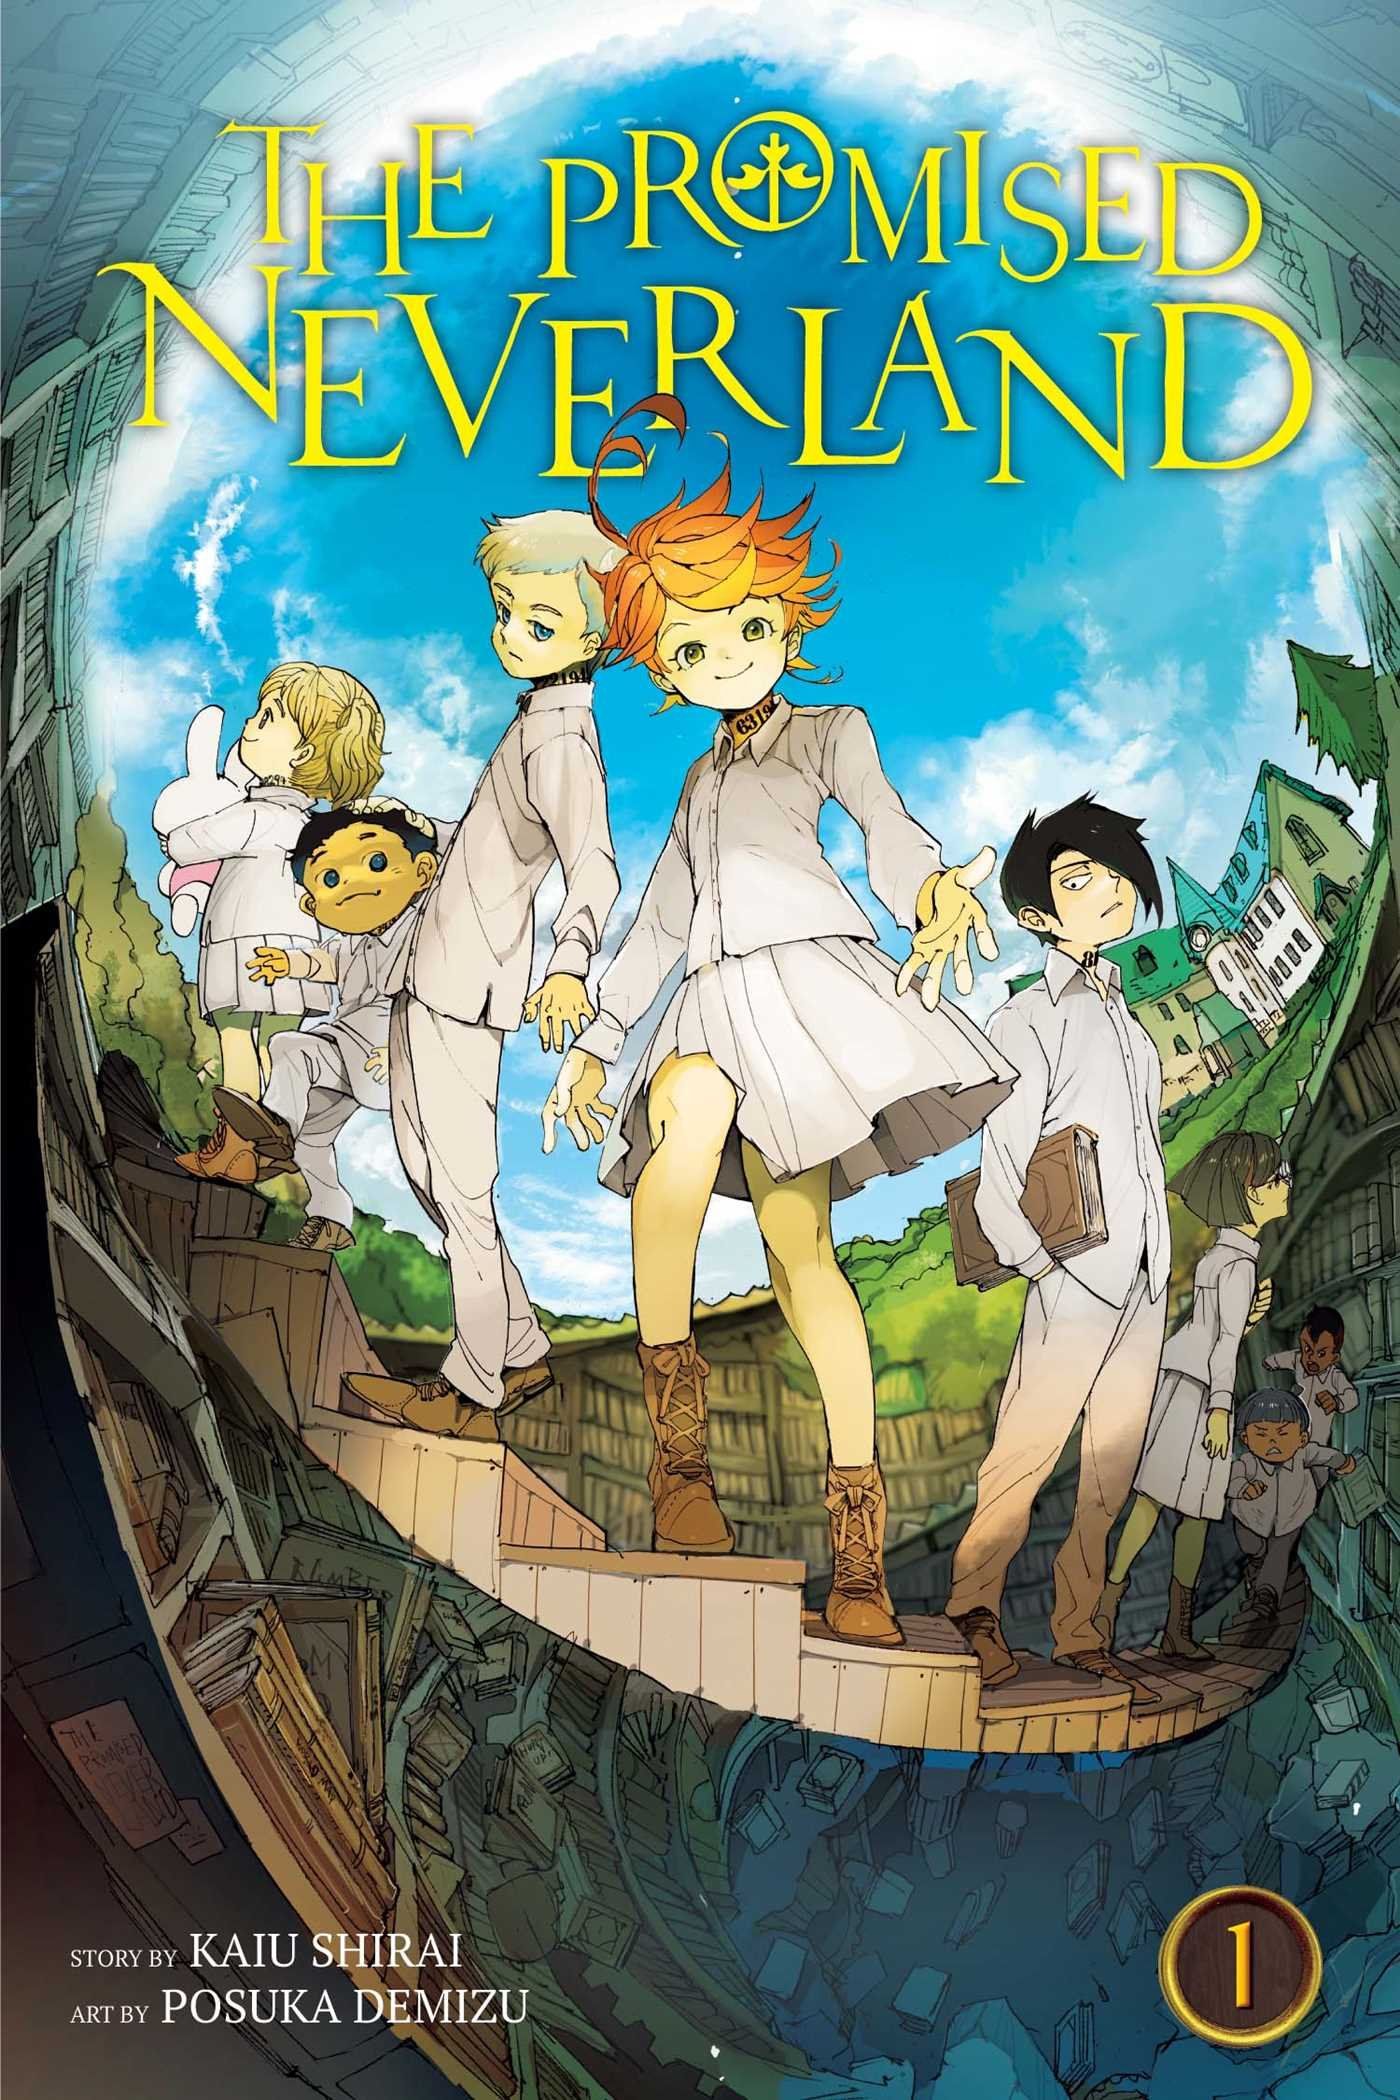 The Promised Neverland by Kaiu Shirai and Posuka Demizu cover